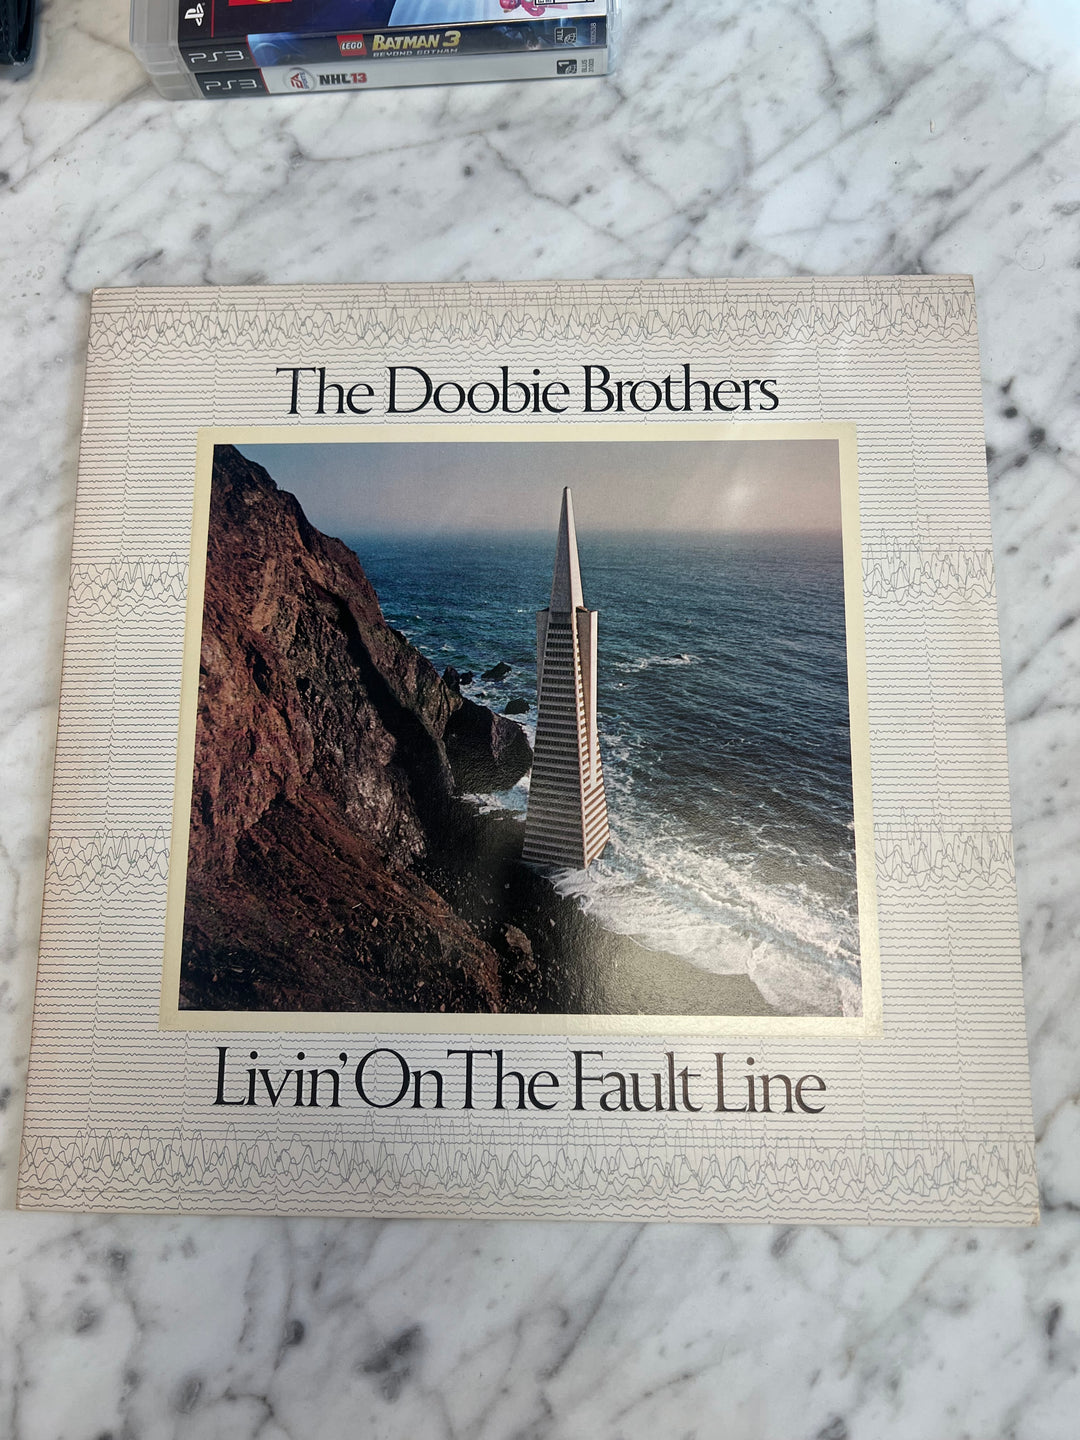 Doobie Brothers, The - Livin' on the Fault Line Vinyl Record